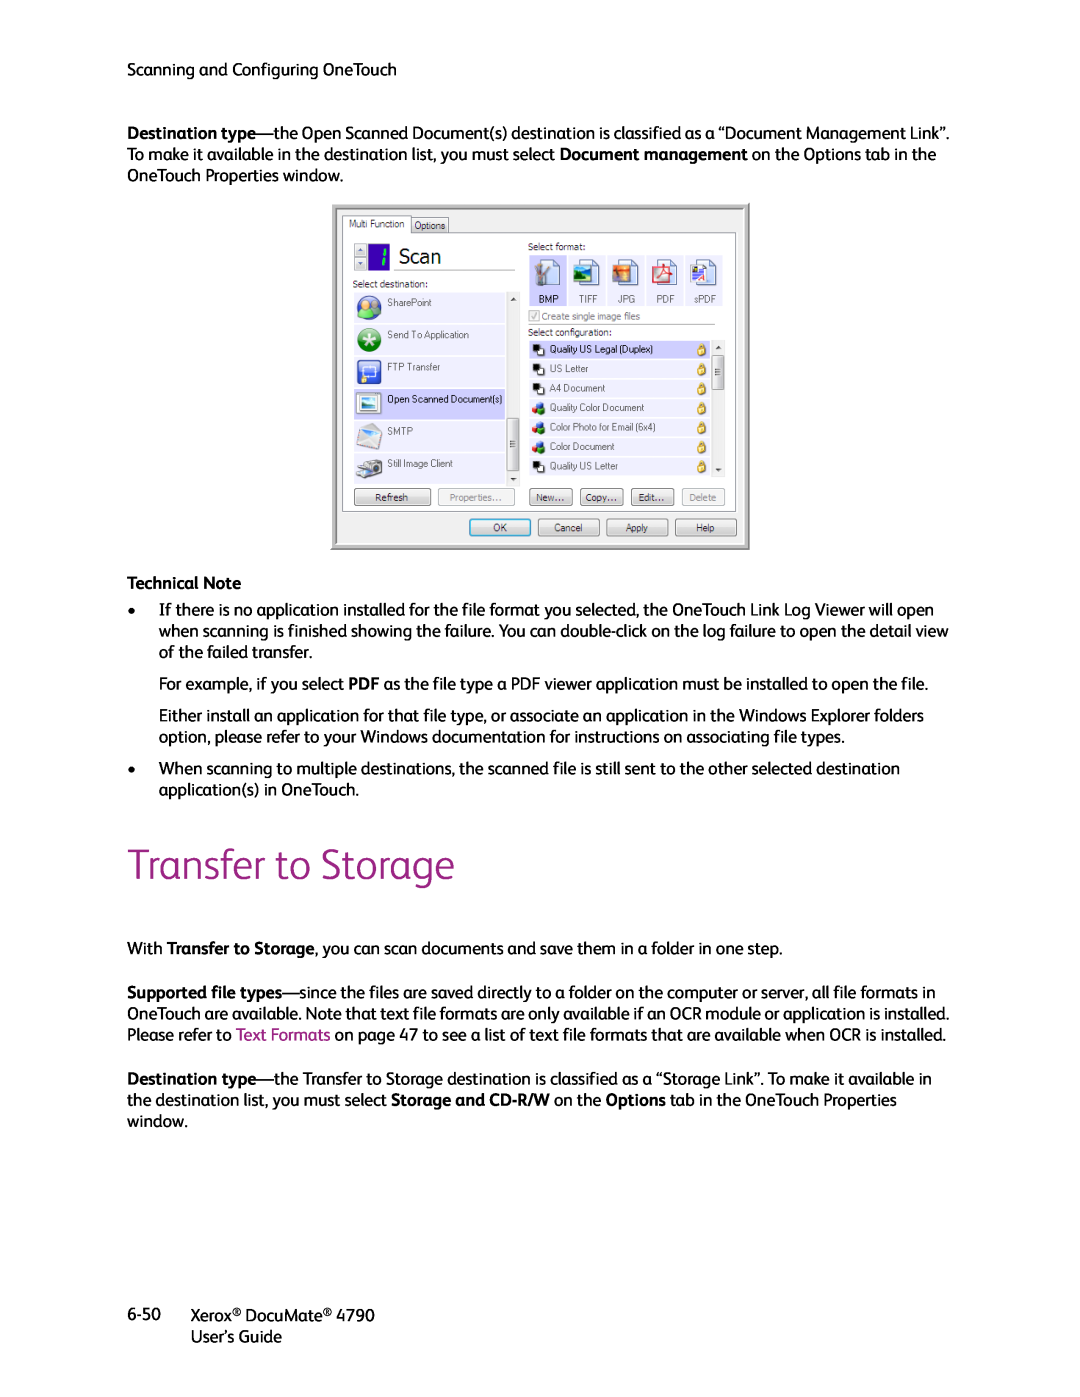 Xerox xerox documate manual Transfer to Storage, Technical Note 